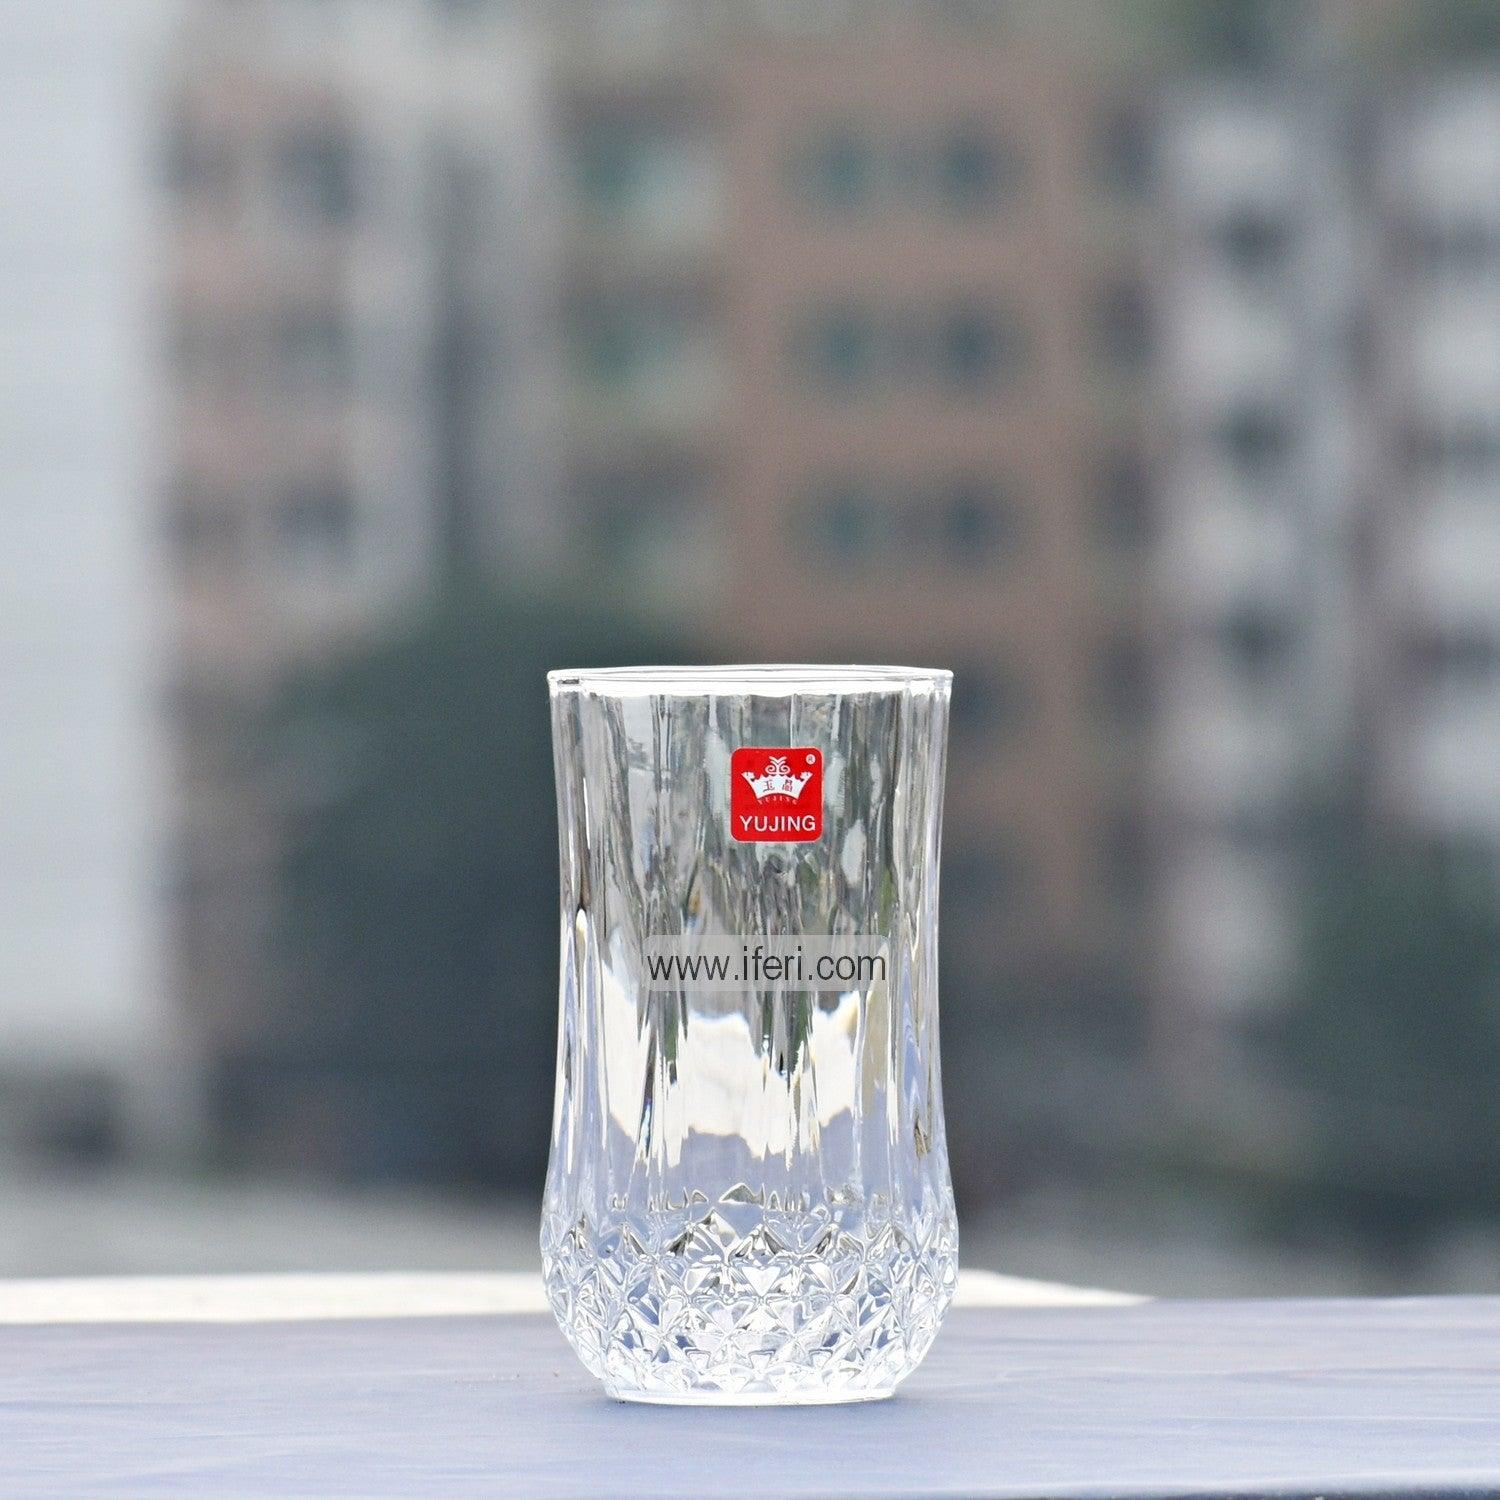 5 Inch 6 Pcs Water Glass Set UT20305 Price in Bangladesh - iferi.com